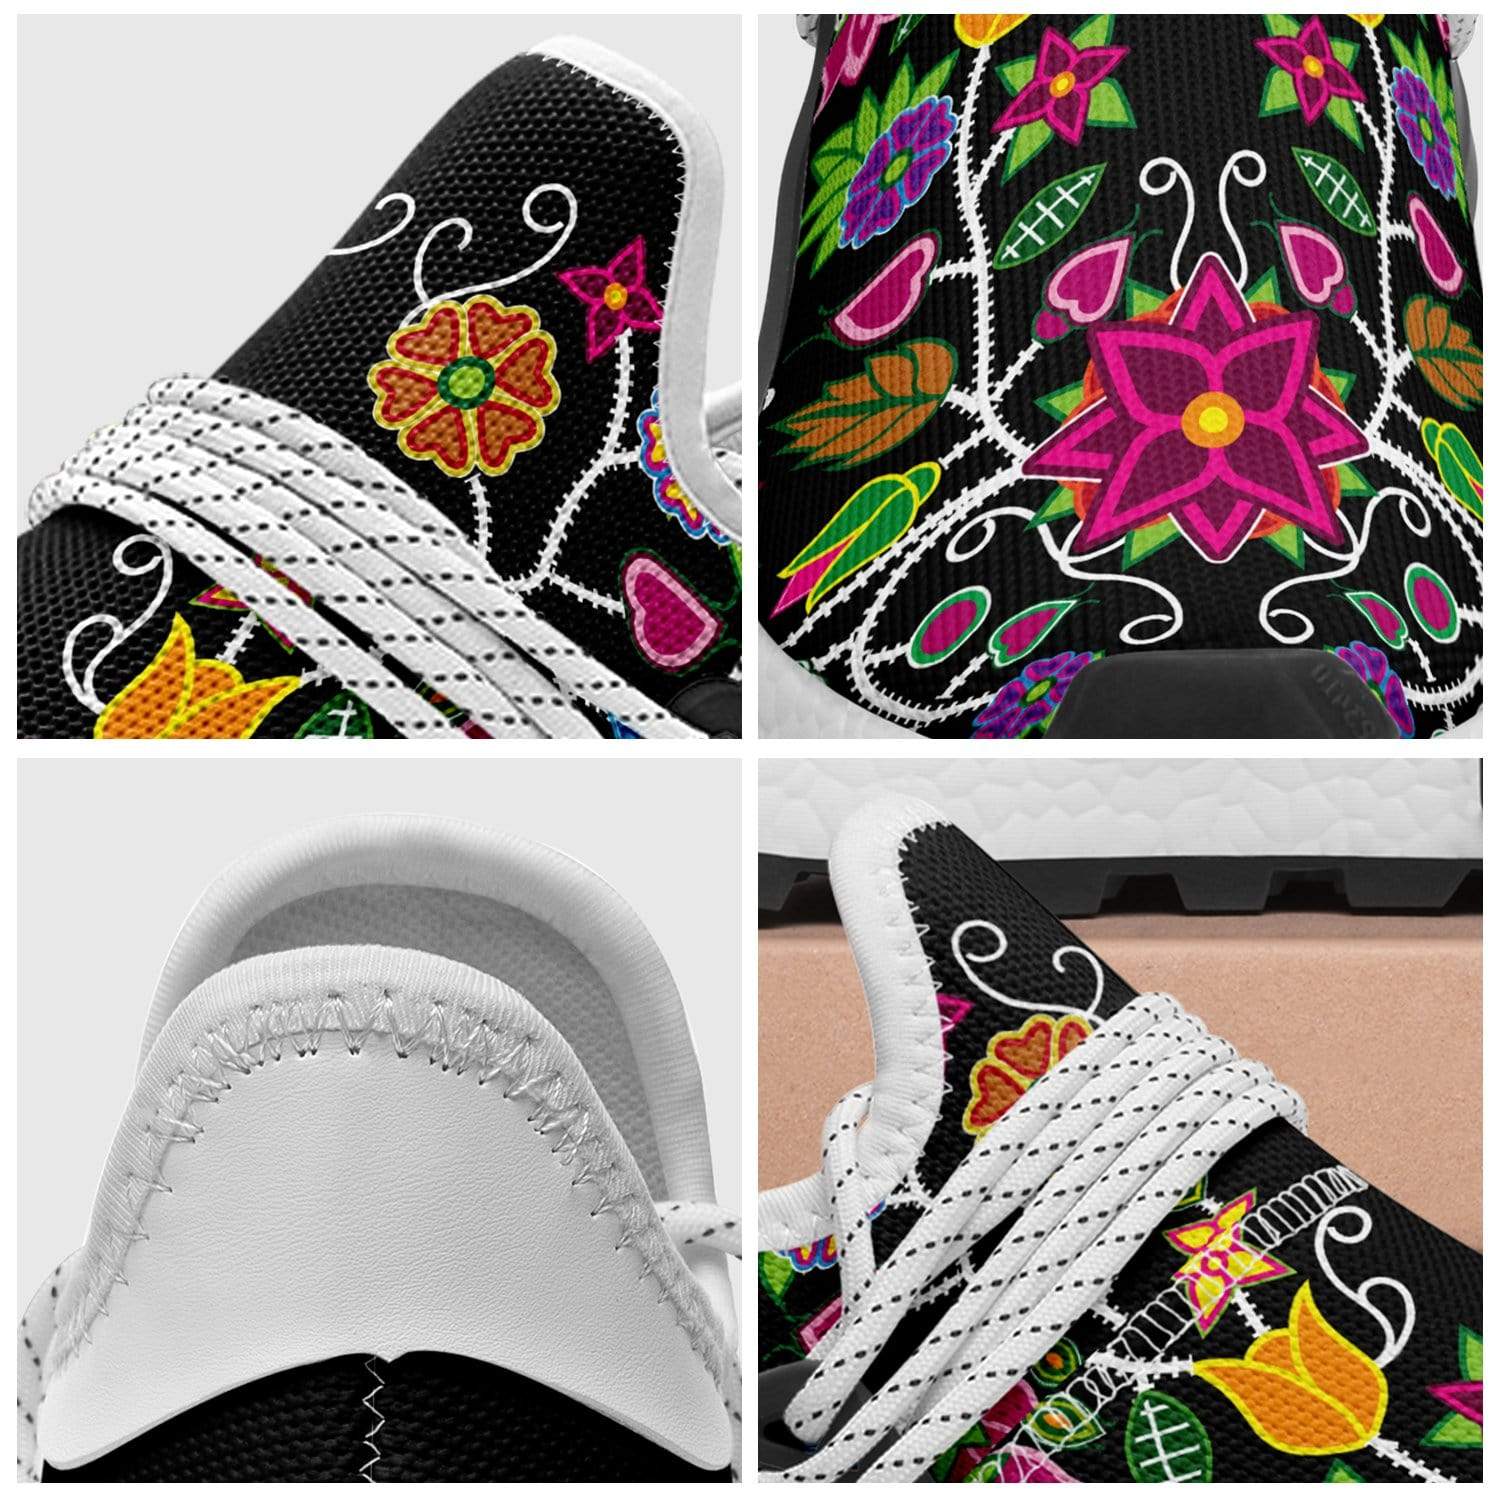 Floral Beadwork - 01 Okaki Sneakers Shoes 49 Dzine 